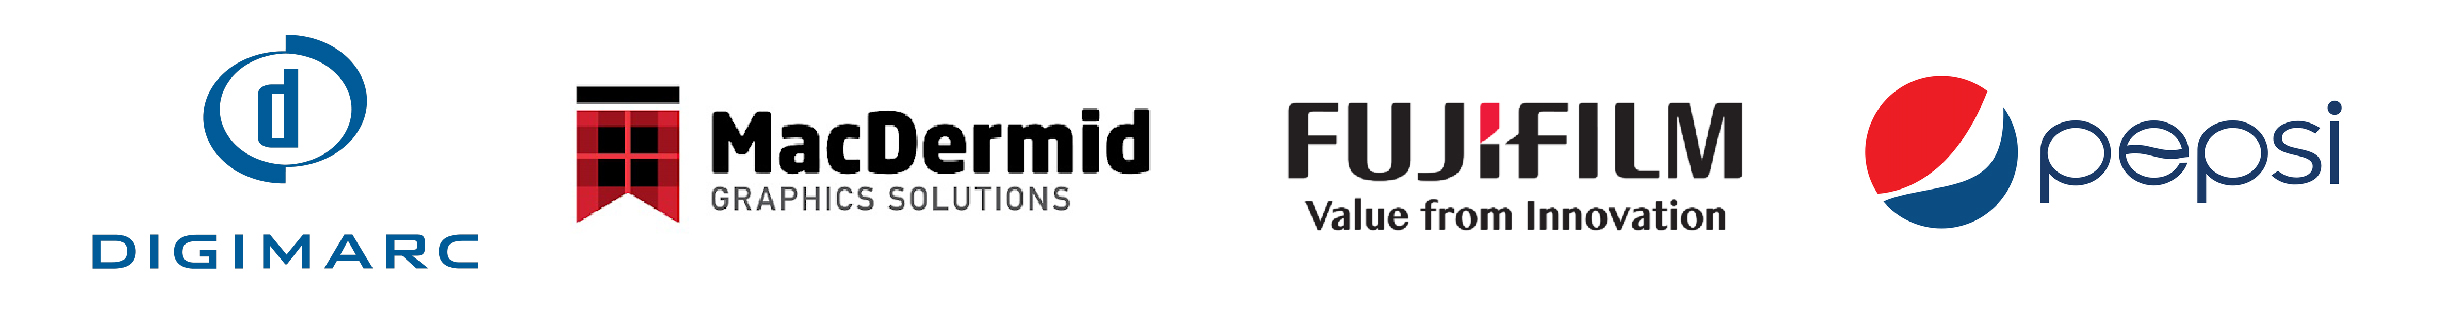 Digimarc, MacDermid Graphic Solutions, FujiFilm Value from Innovation, pepsi